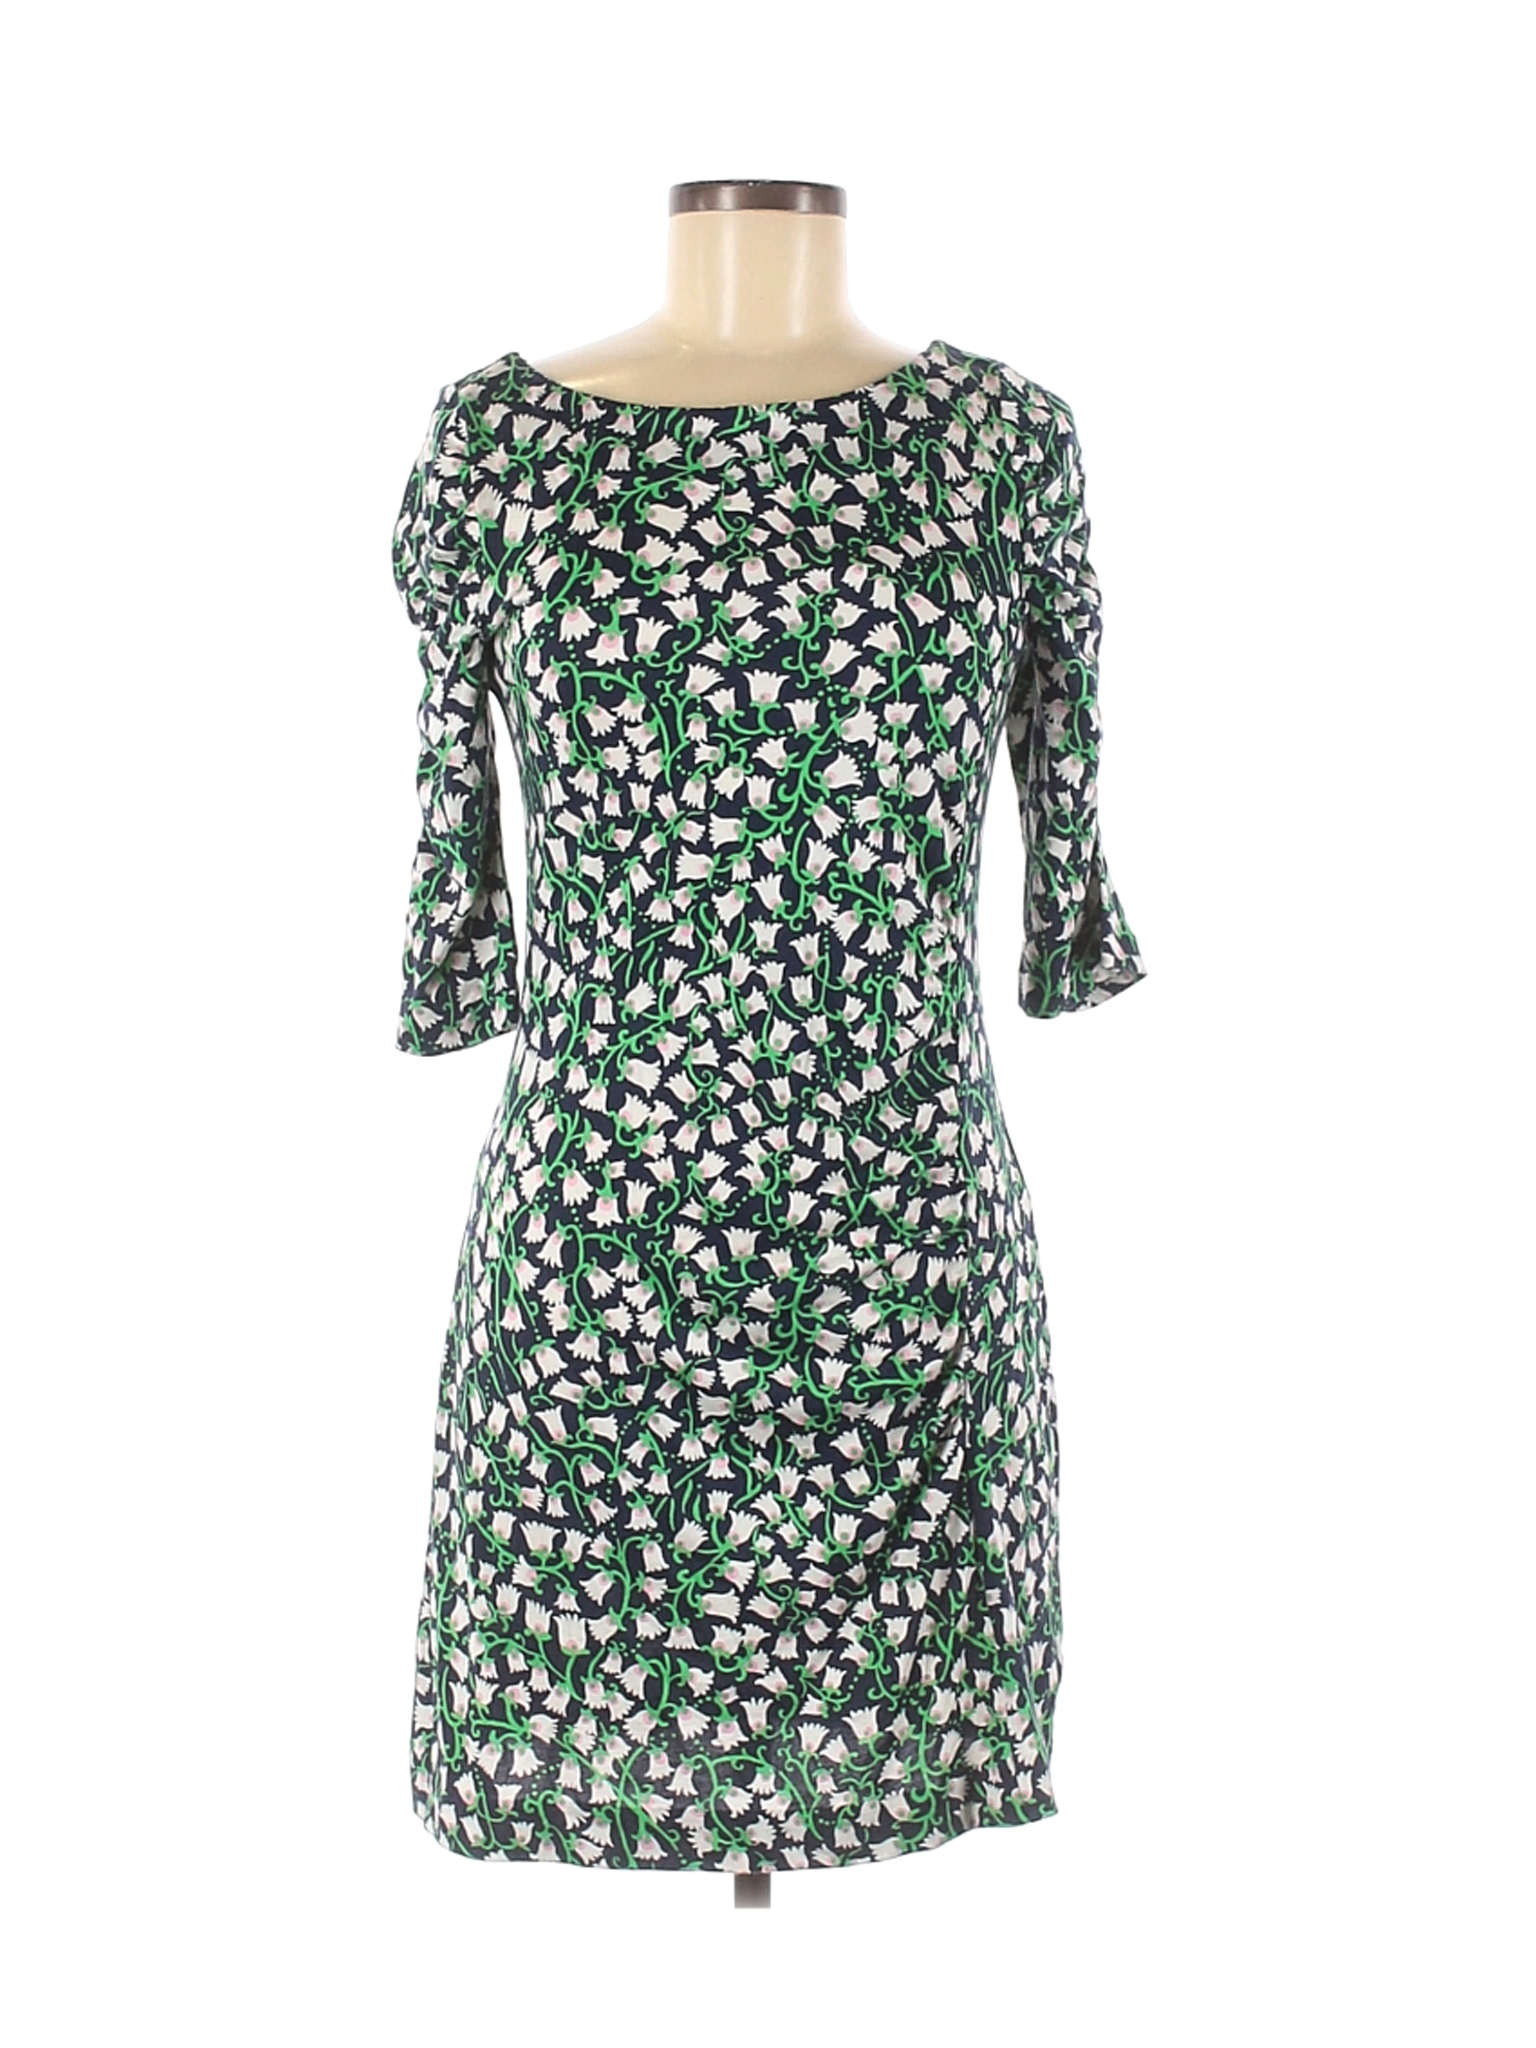 Lilly Pulitzer Women Green Casual Dress M | eBay